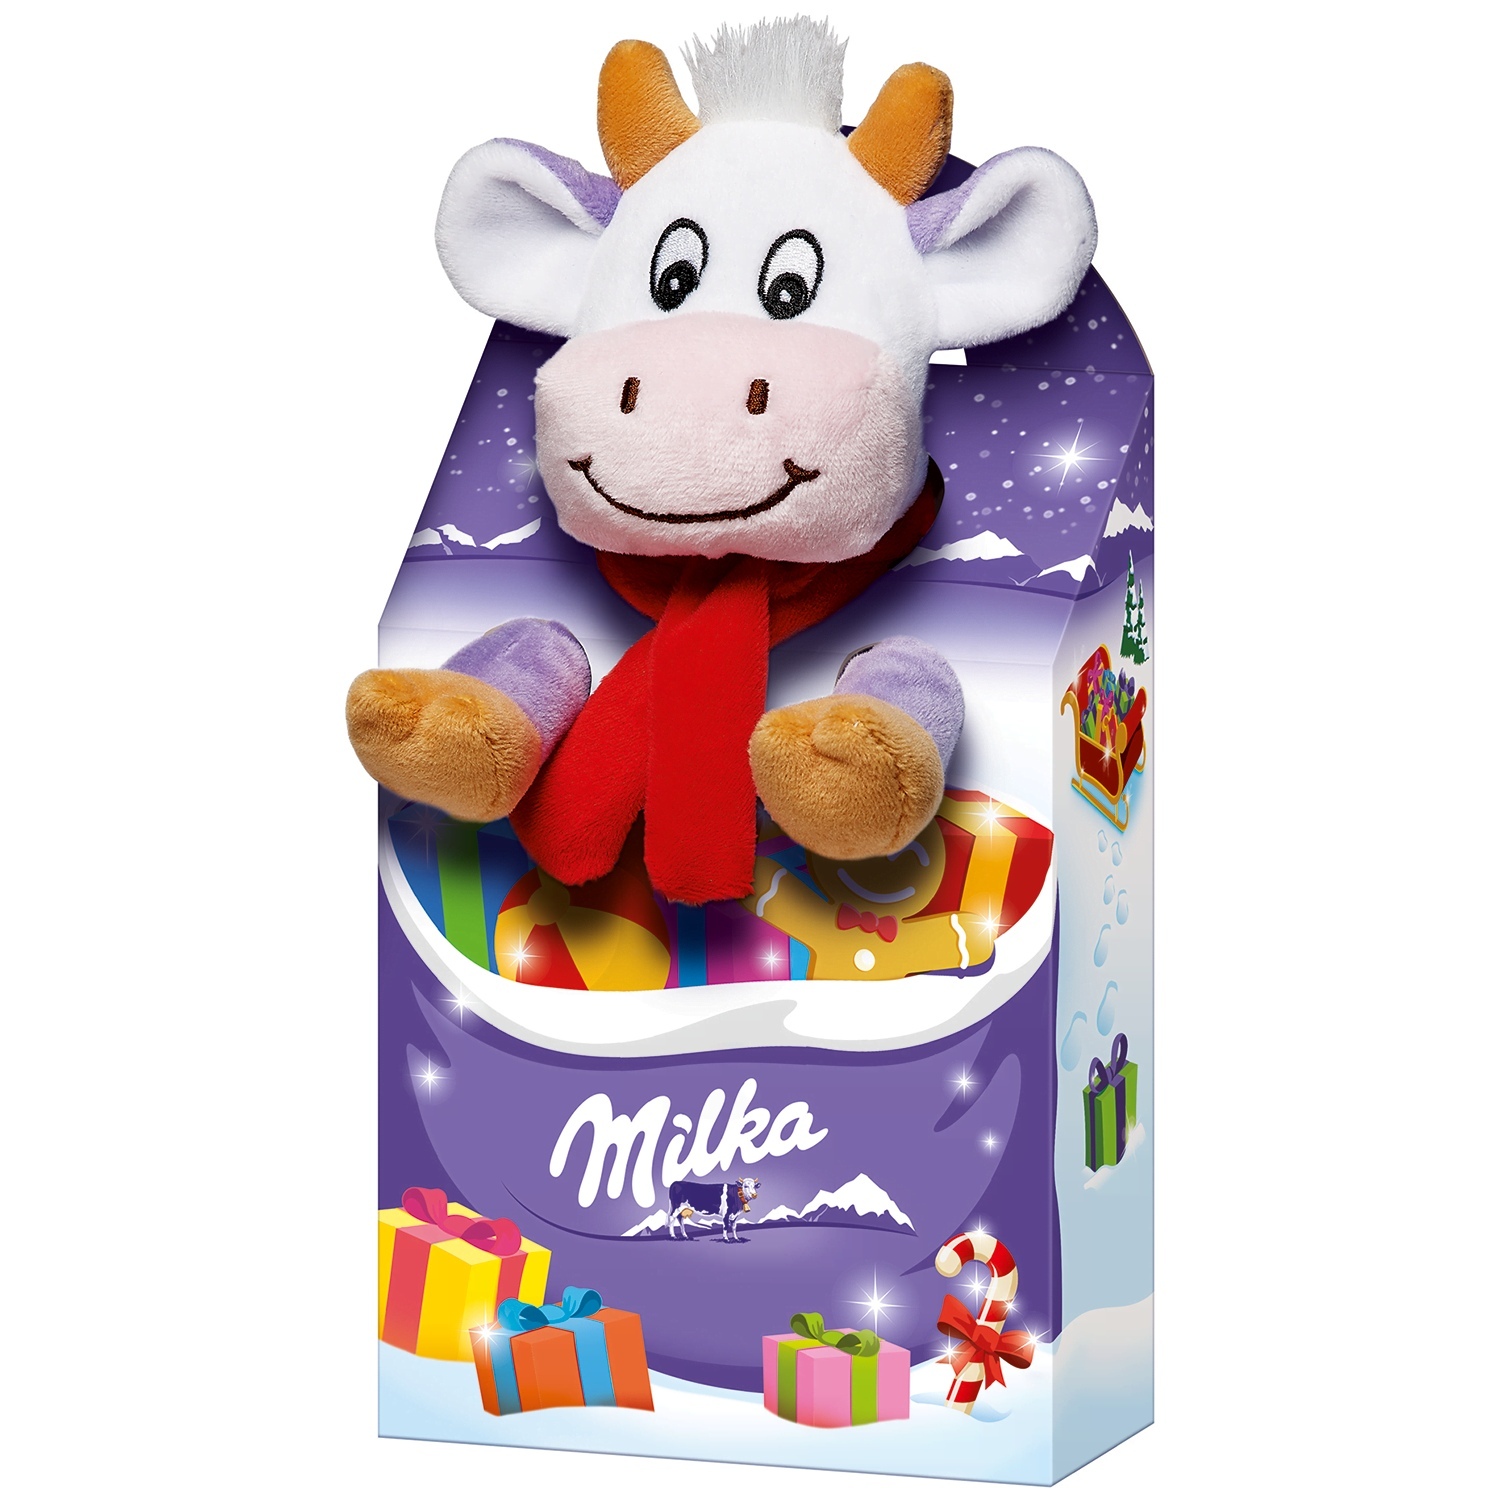 Игрушек шоколад. Корова Milka игрушка. Милка Мейджик микс плюшевая. Плюшевая игрушка коровка Милка. Новогодний подарок Милка.